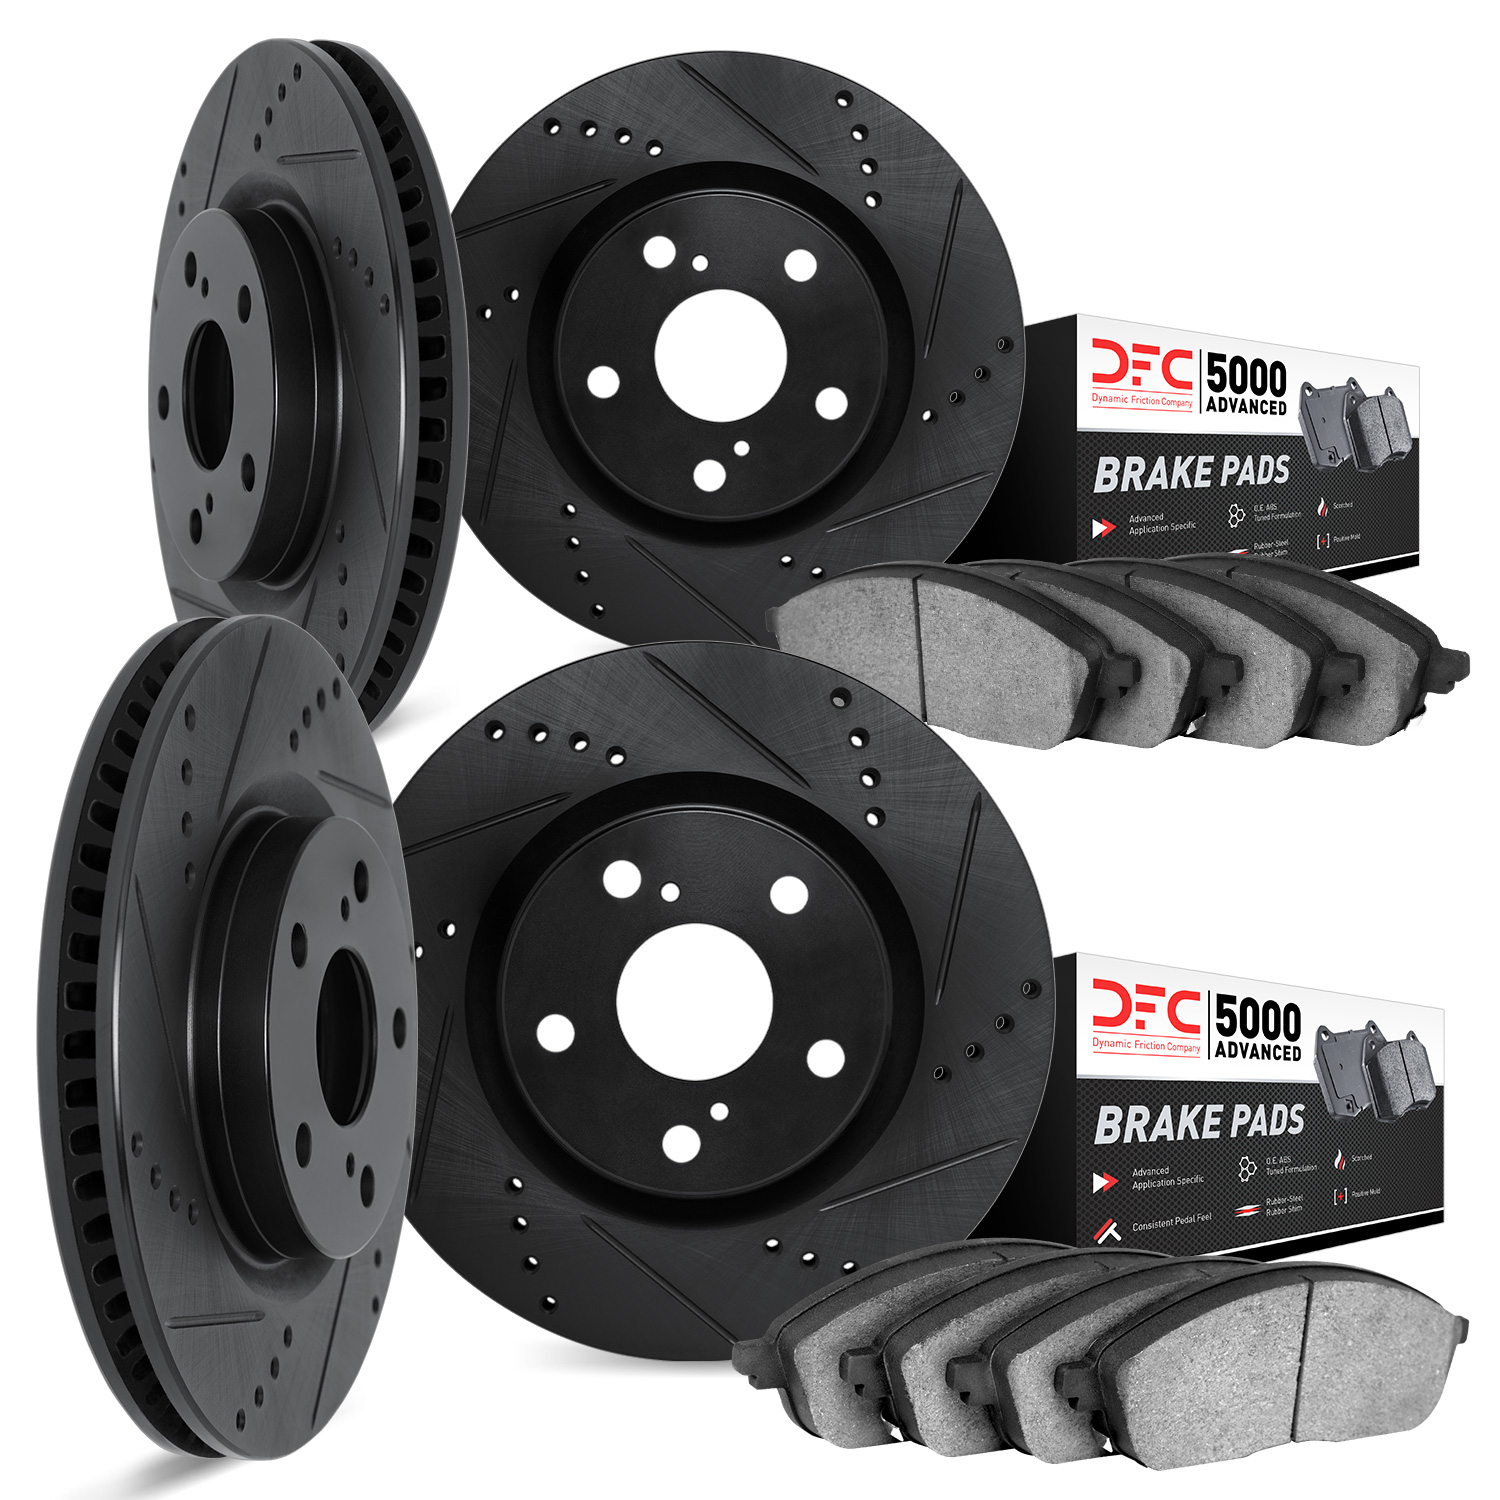 8504-54280 Drilled/Slotted Brake Rotors w/5000 Advanced Brake Pads Kit [Black], 2005-2014 Ford/Lincoln/Mercury/Mazda, Position: